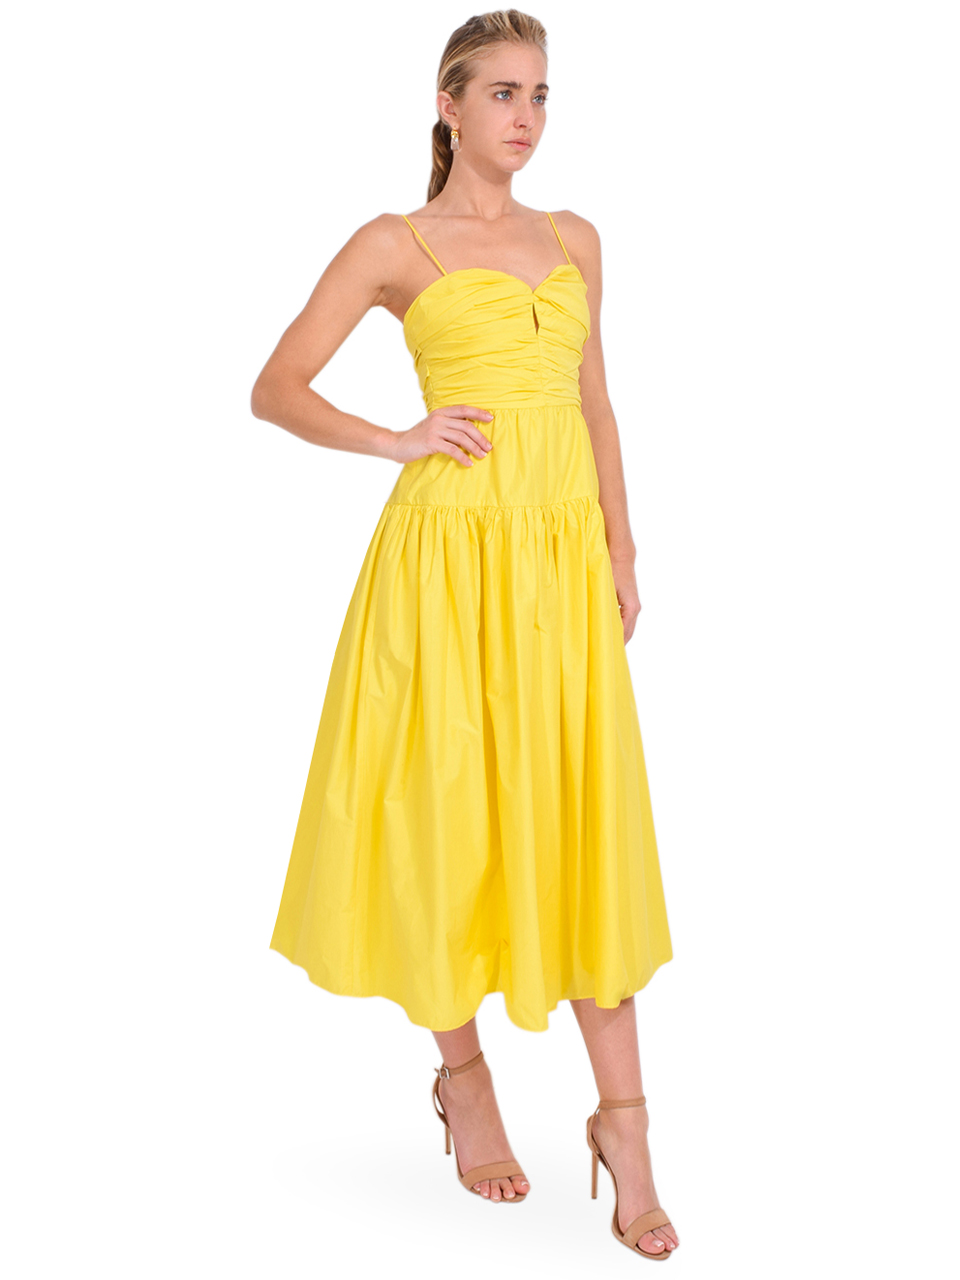 TANYA TAYLOR Jenna Dress in Daffodil Side View 